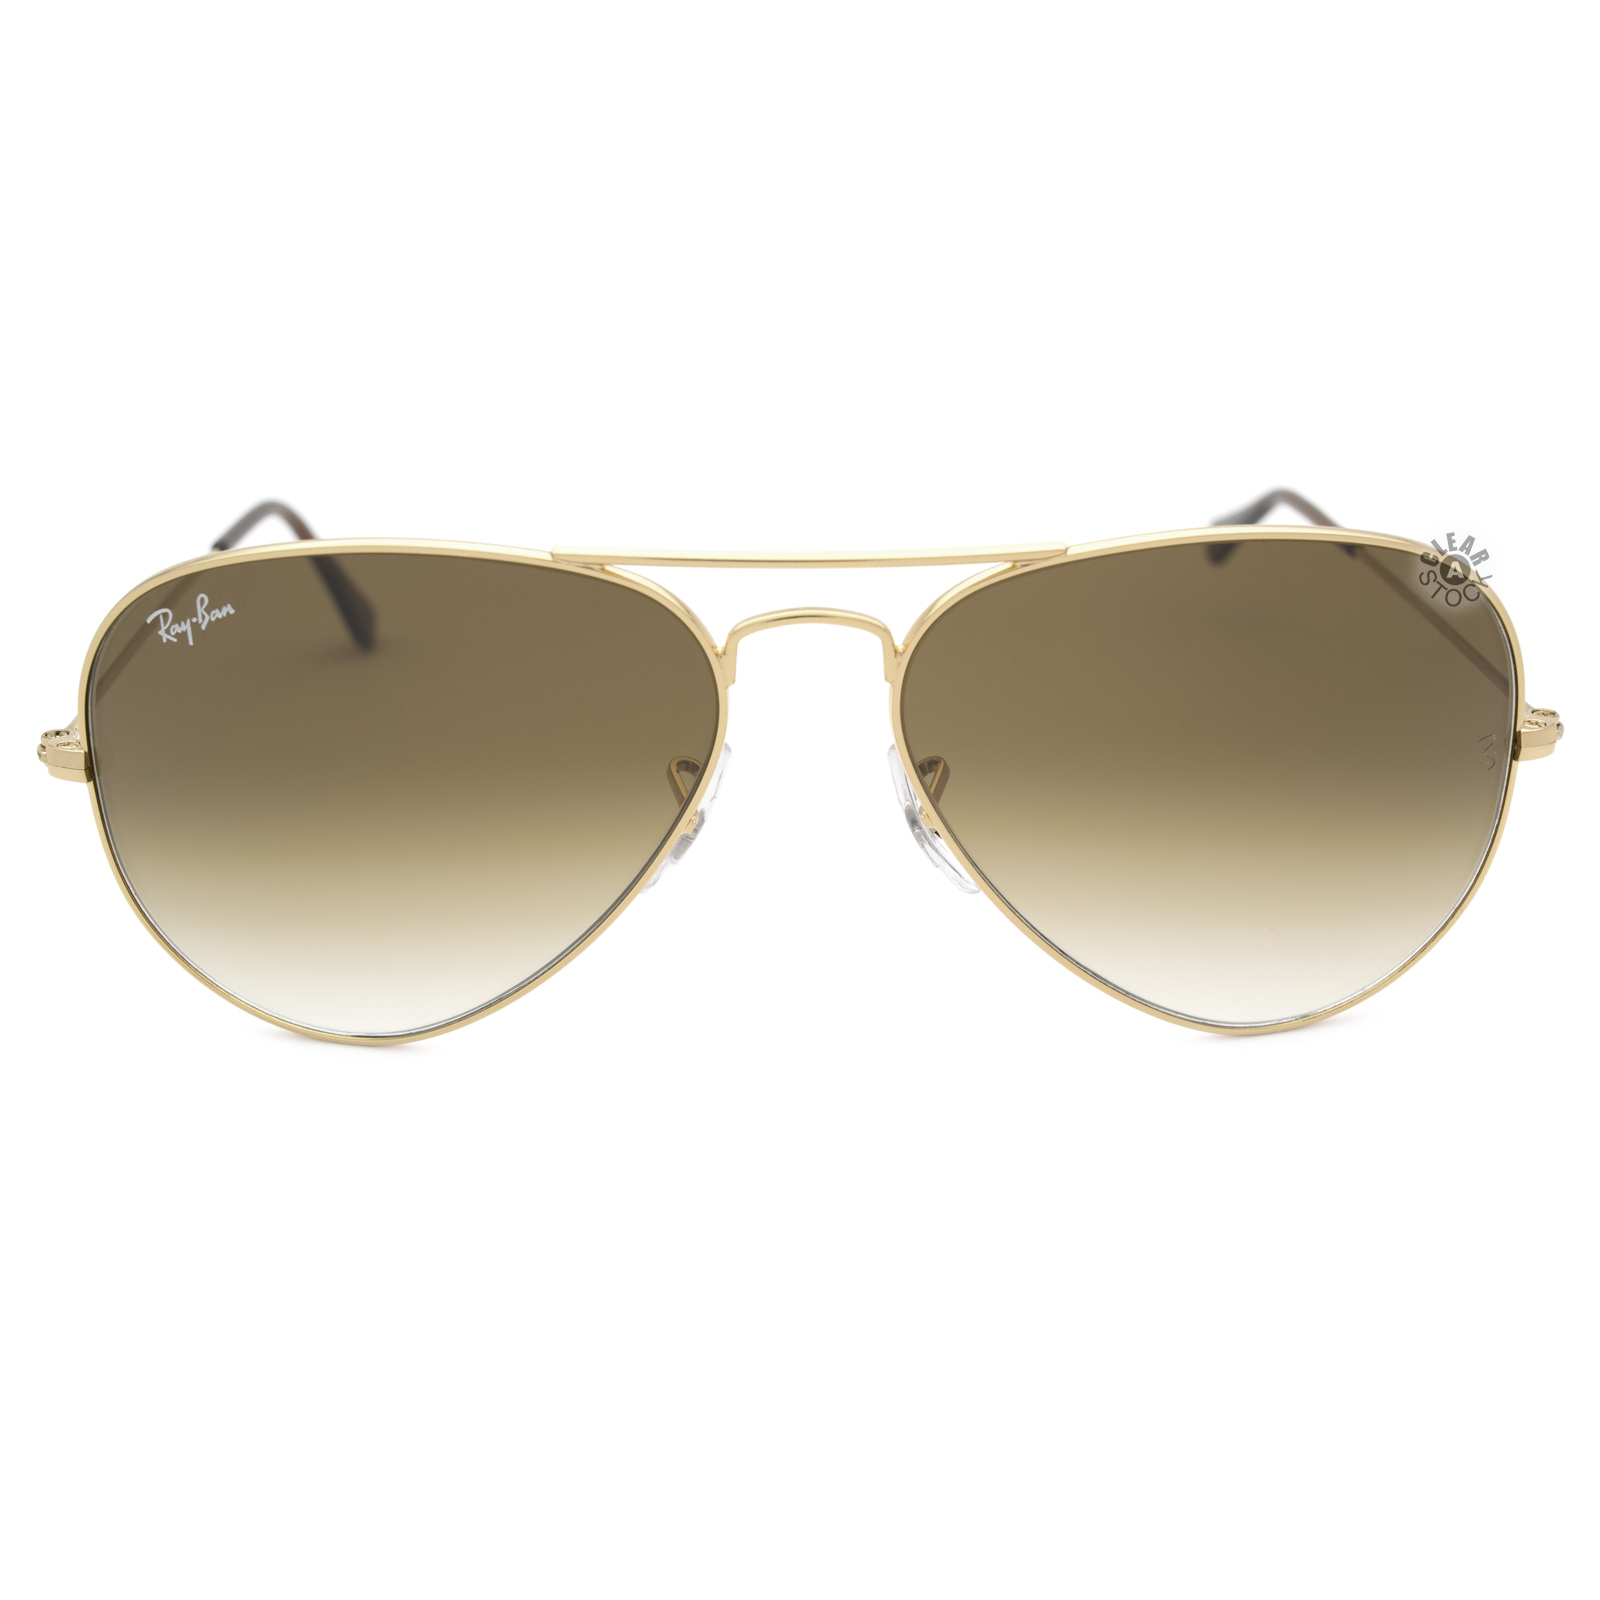 Ray Ban Rb3025 001 51 Aviator Sunglasses Gold Light Brown Gradient 58mm Usa